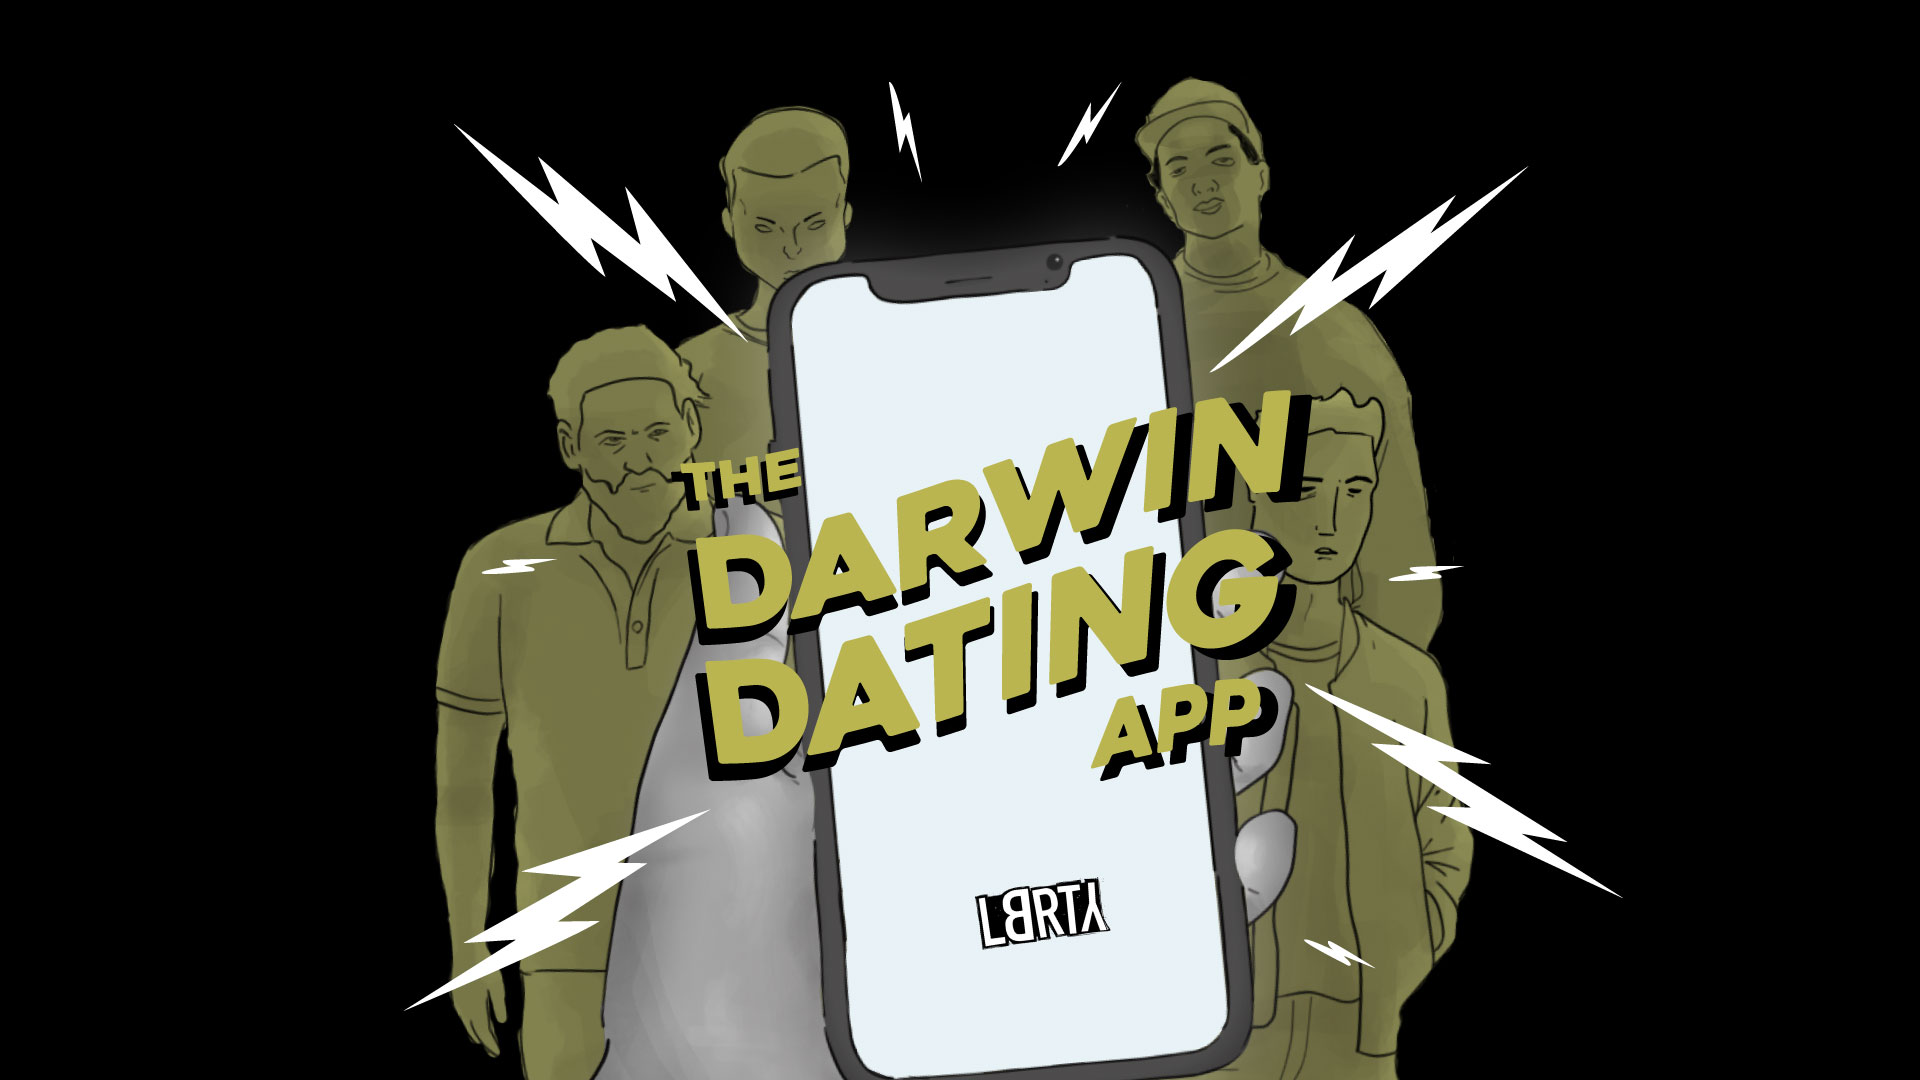 The Darwin dating app